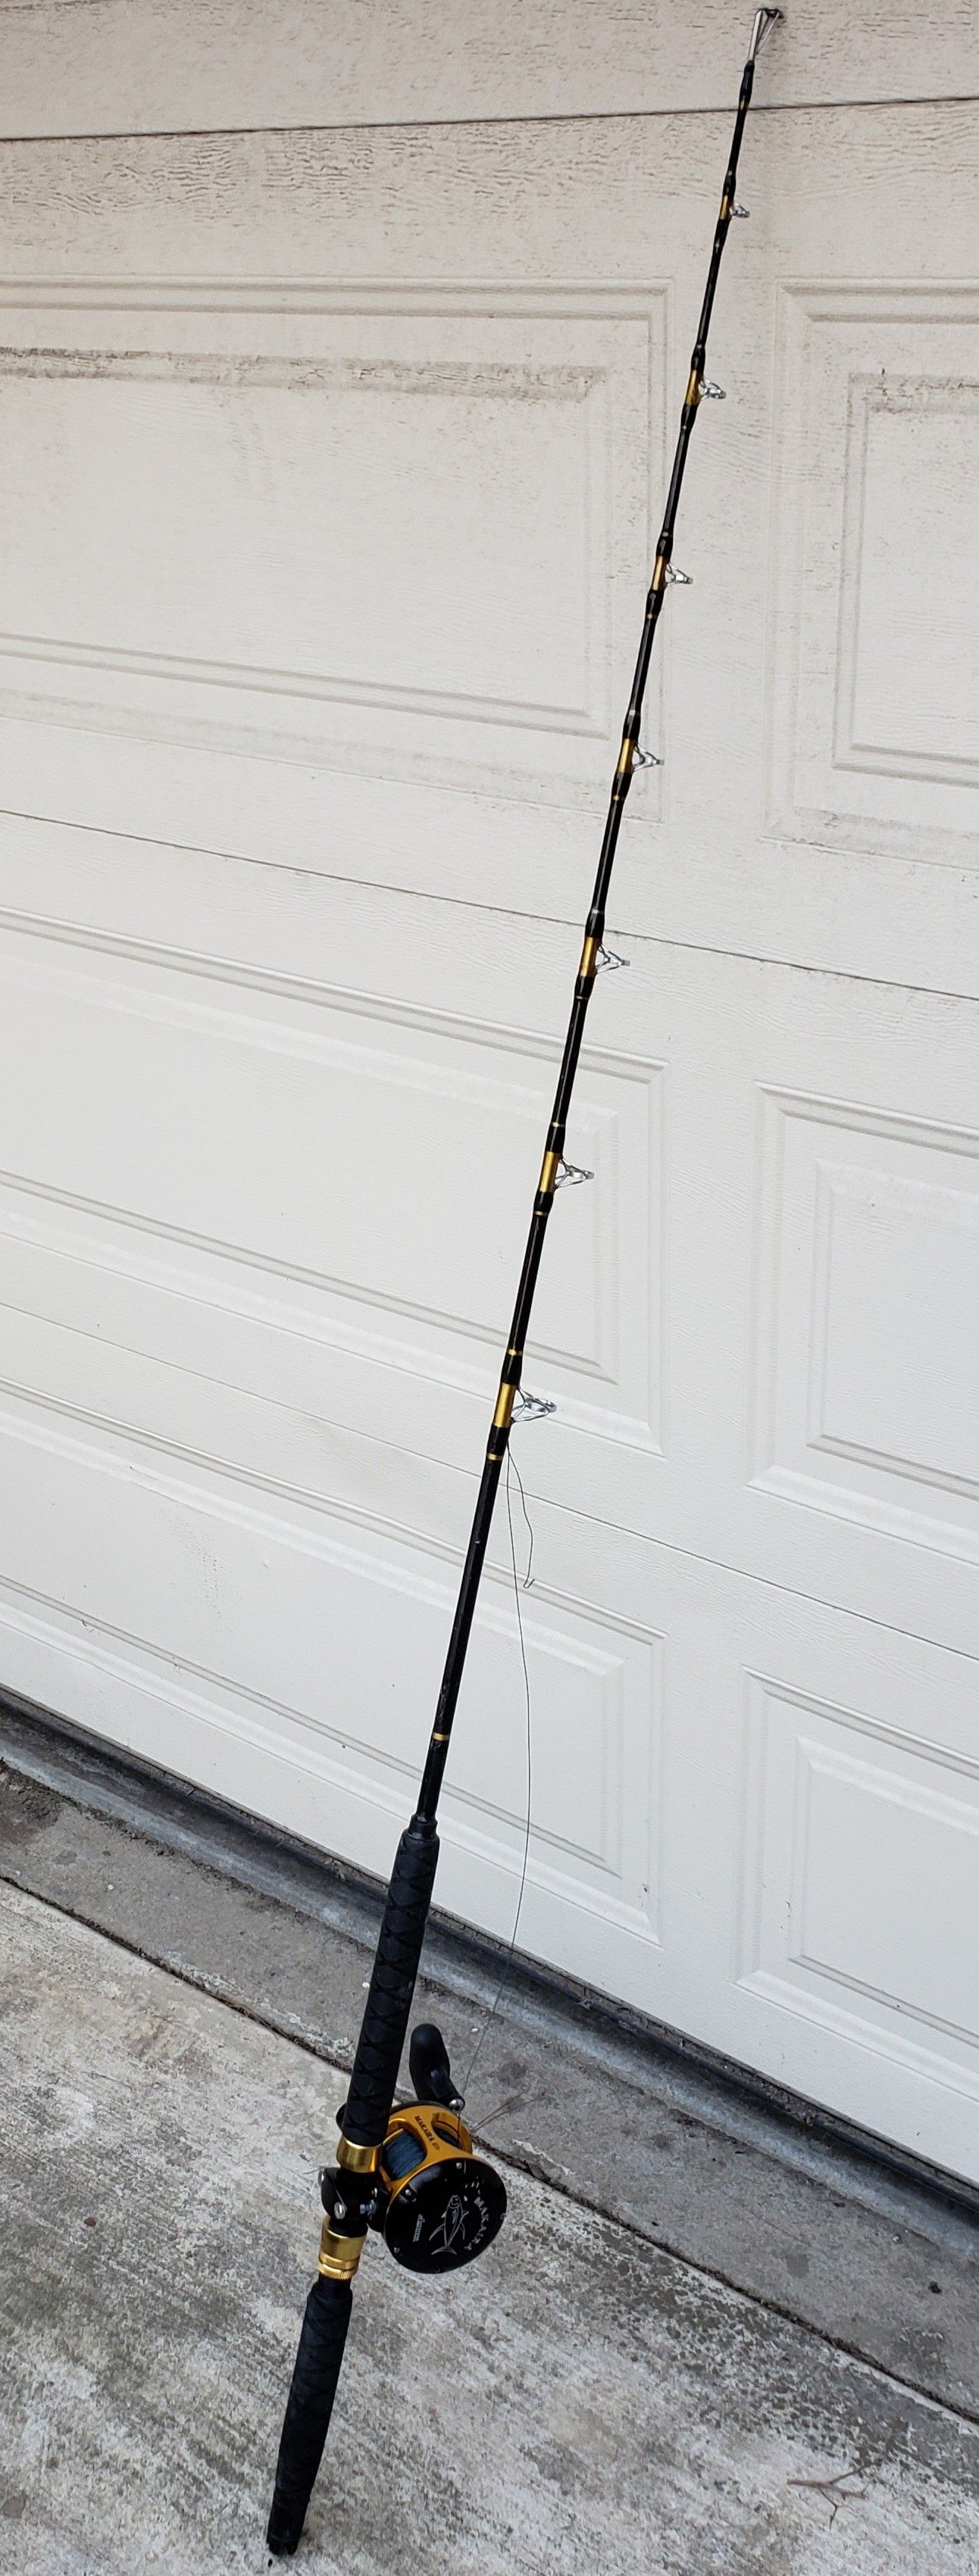 Okuma Makira 20 fishing reel & rod spooled with 120lb test line with costum 100lb rated rod.